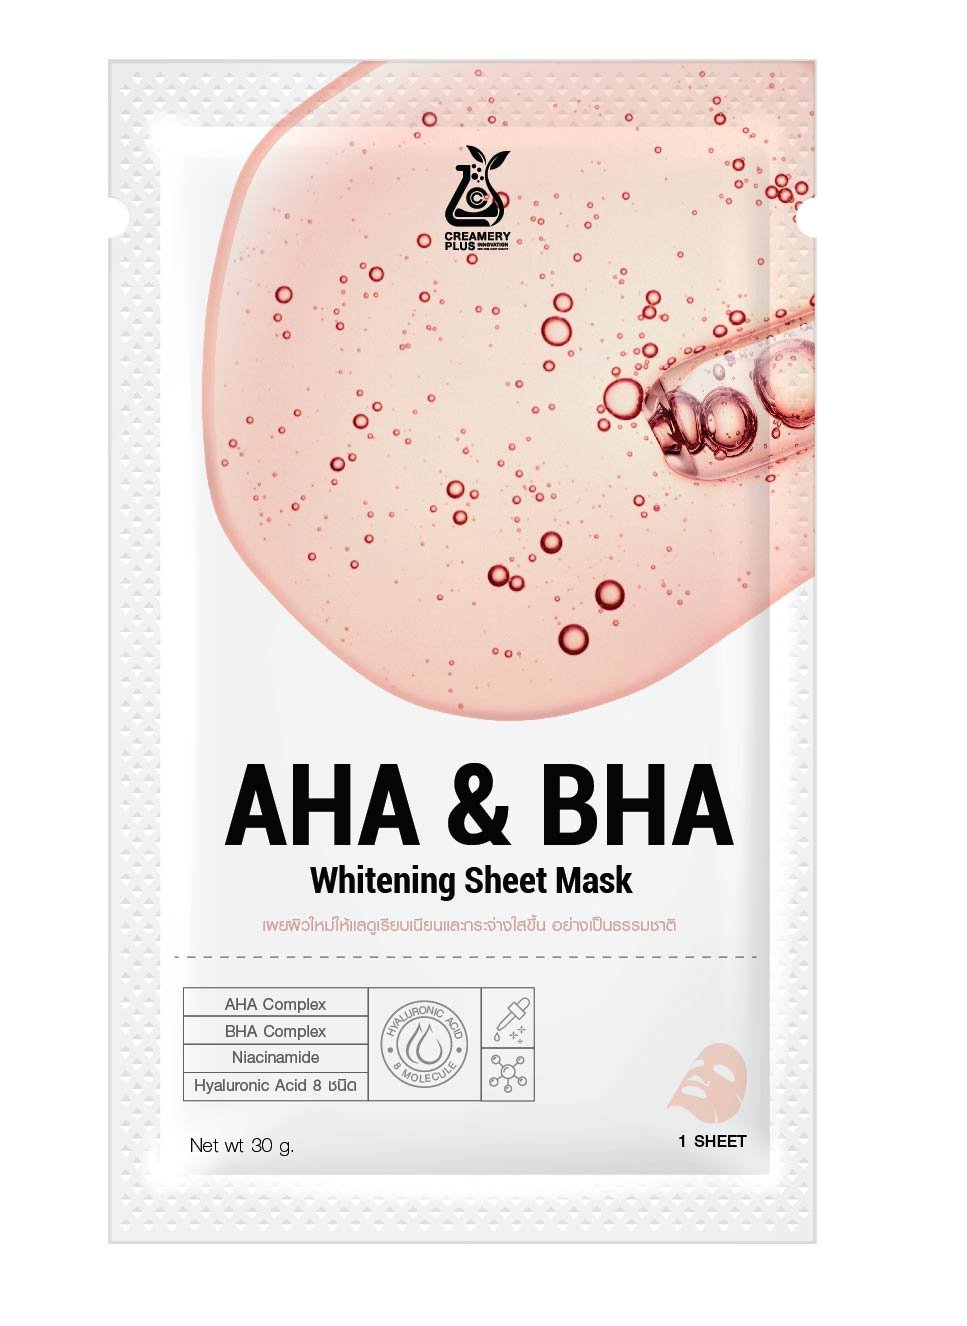 AHA & BHA Whitening Sheet Mask